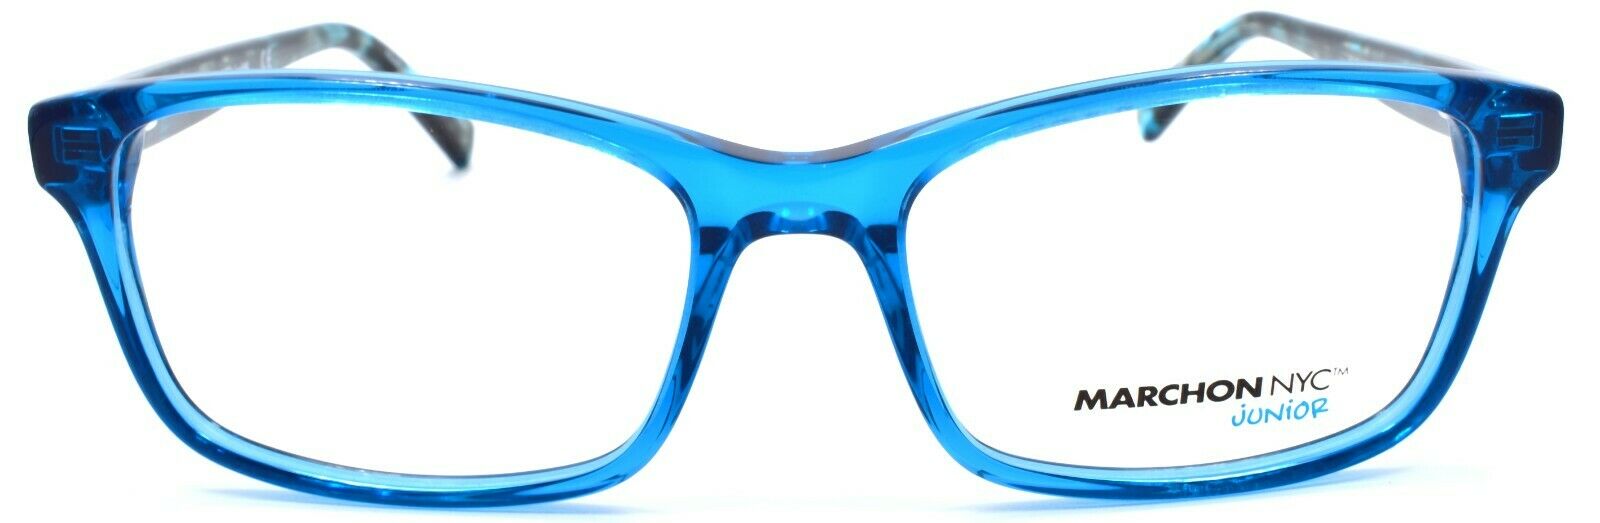 2-Marchon M-Cornelia Mini 320 Kids Girls Eyeglasses Frames 48-15-130 Teal-886895470292-IKSpecs